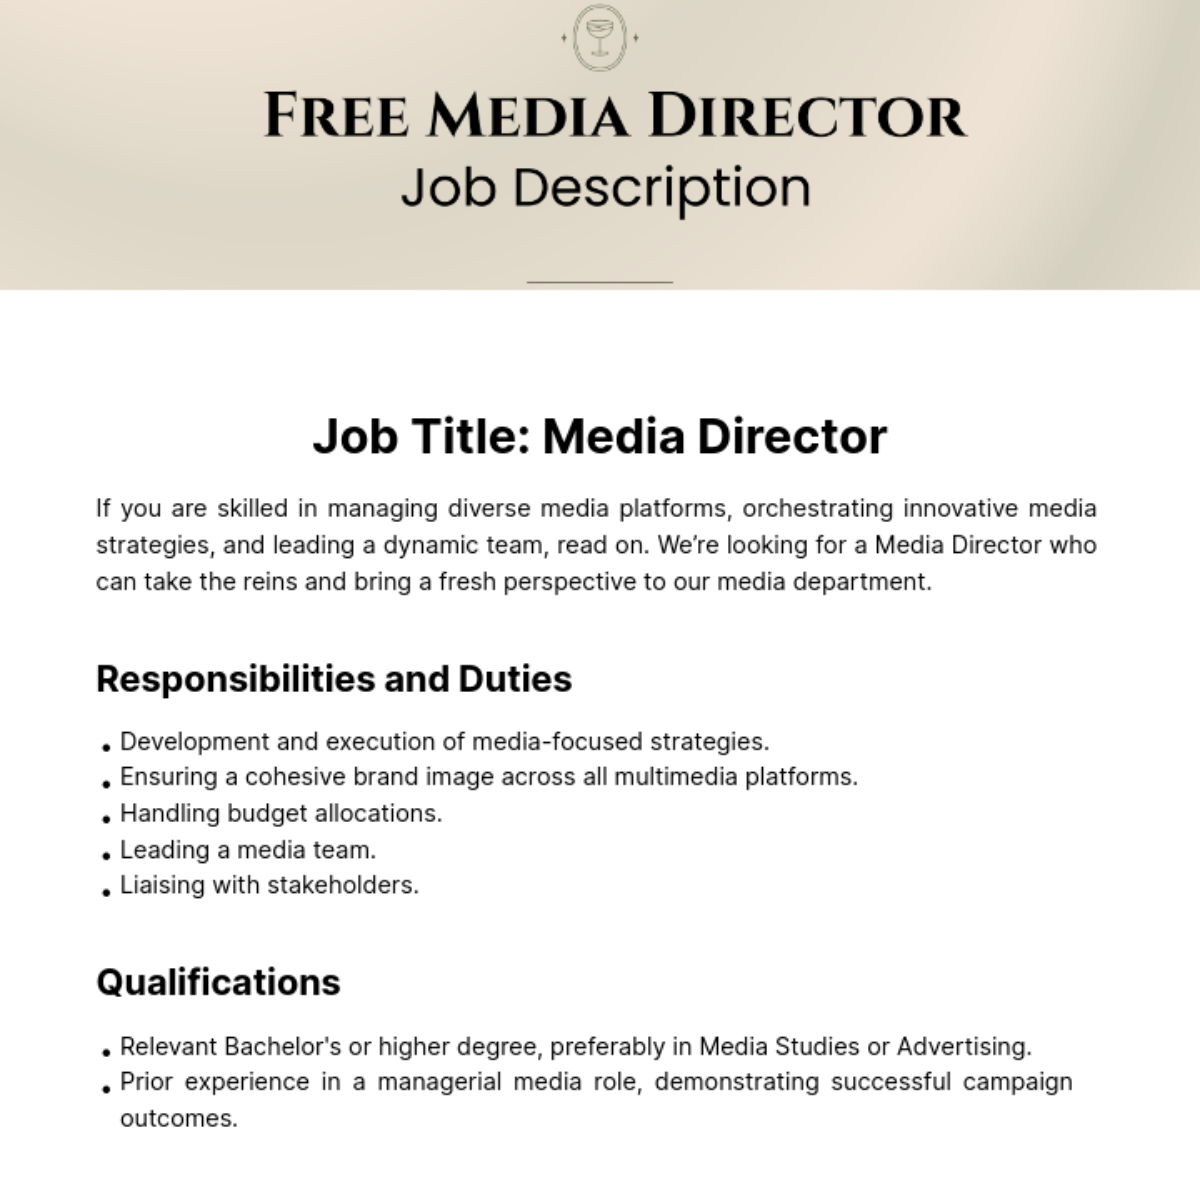 Free Media Director Job Description Template